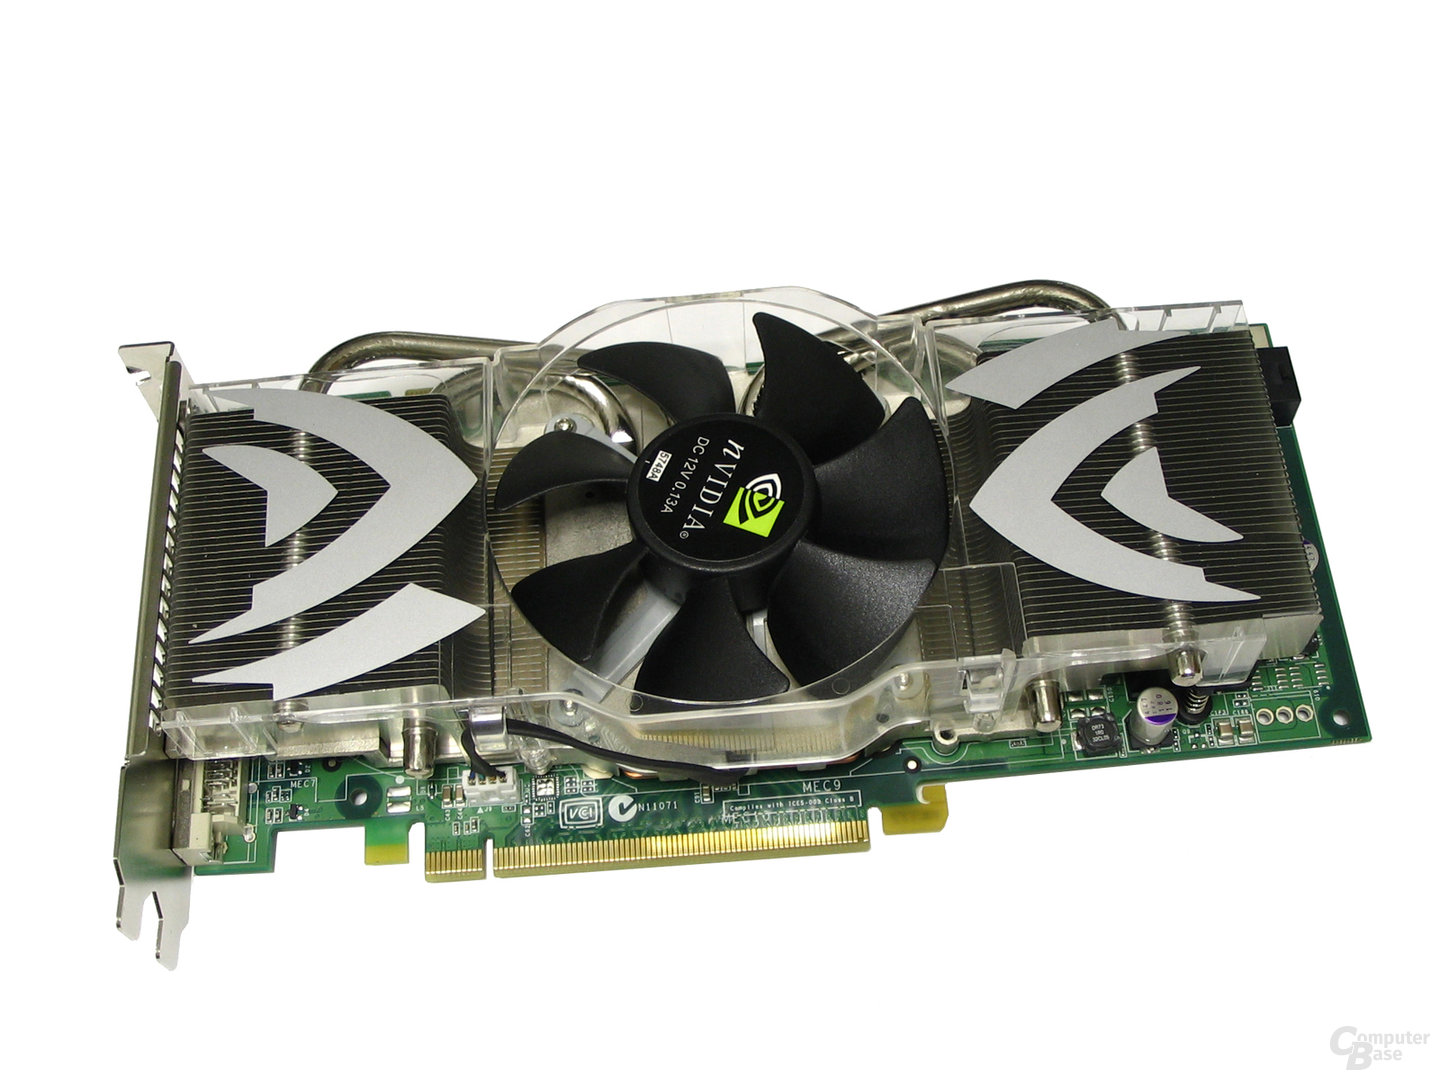 nVidia GeForce 7800 GTX 512